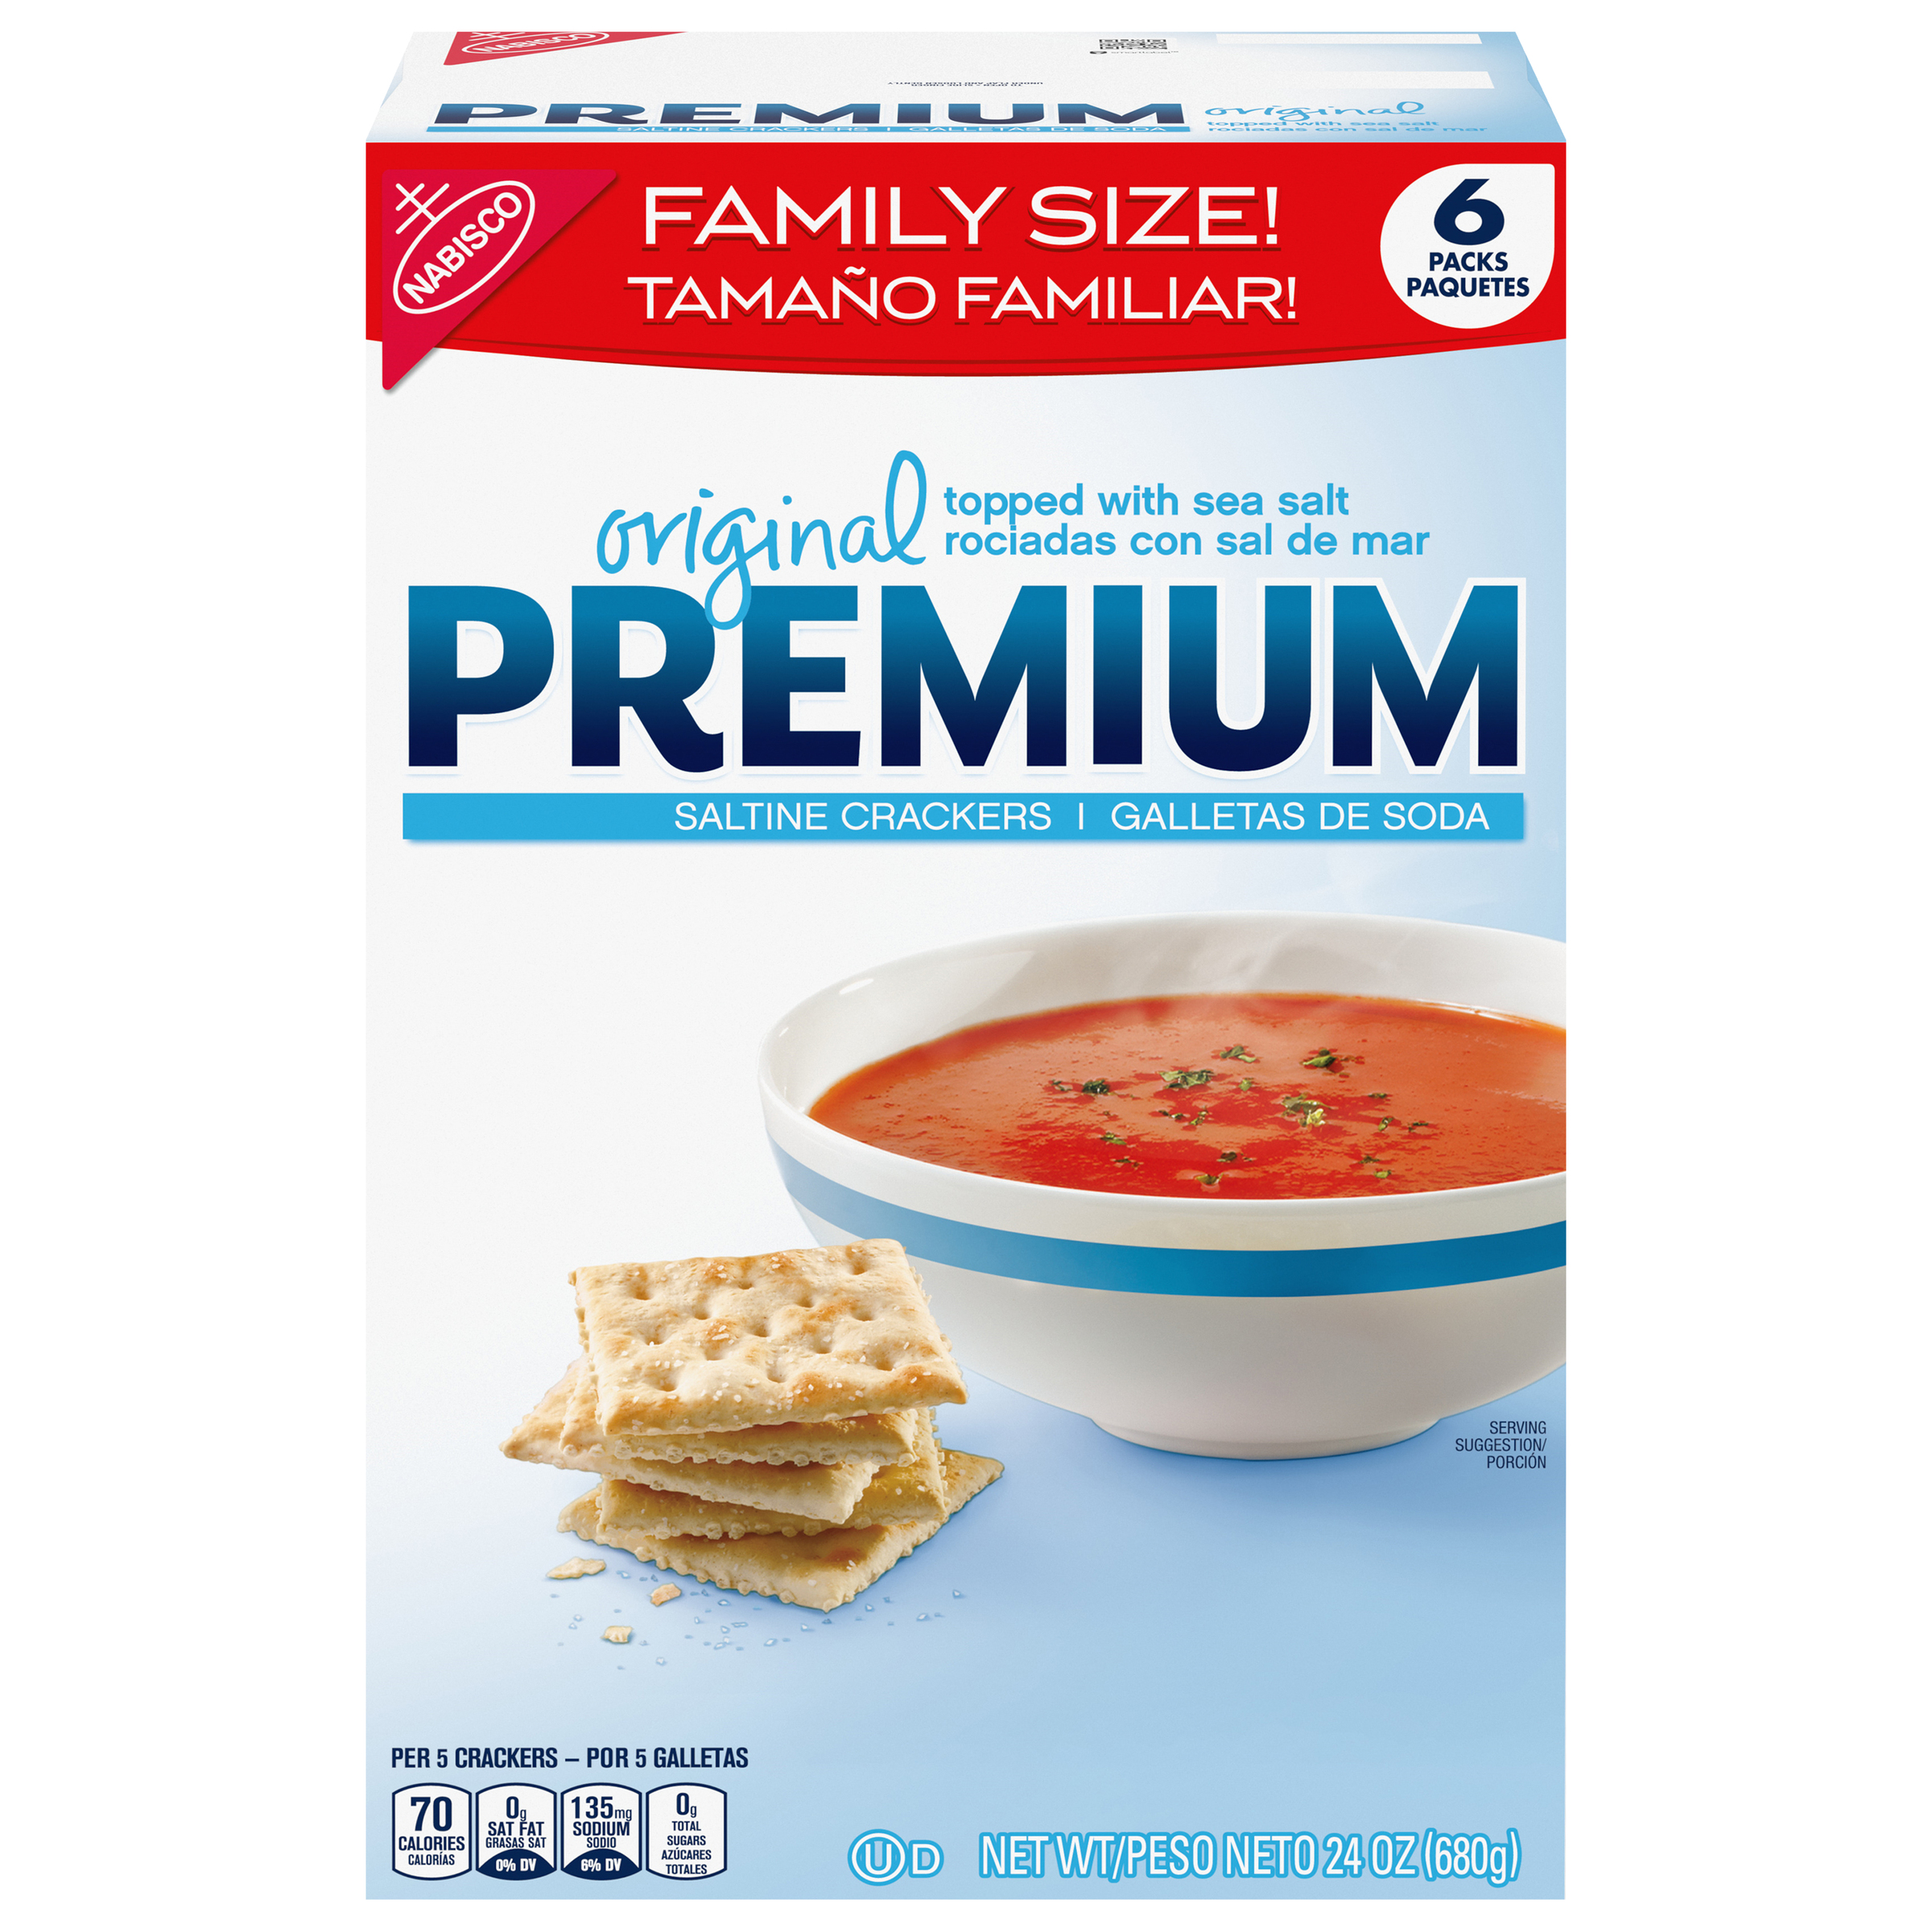 Premium Original Saltine Crackers, Family Size, 24 oz-0